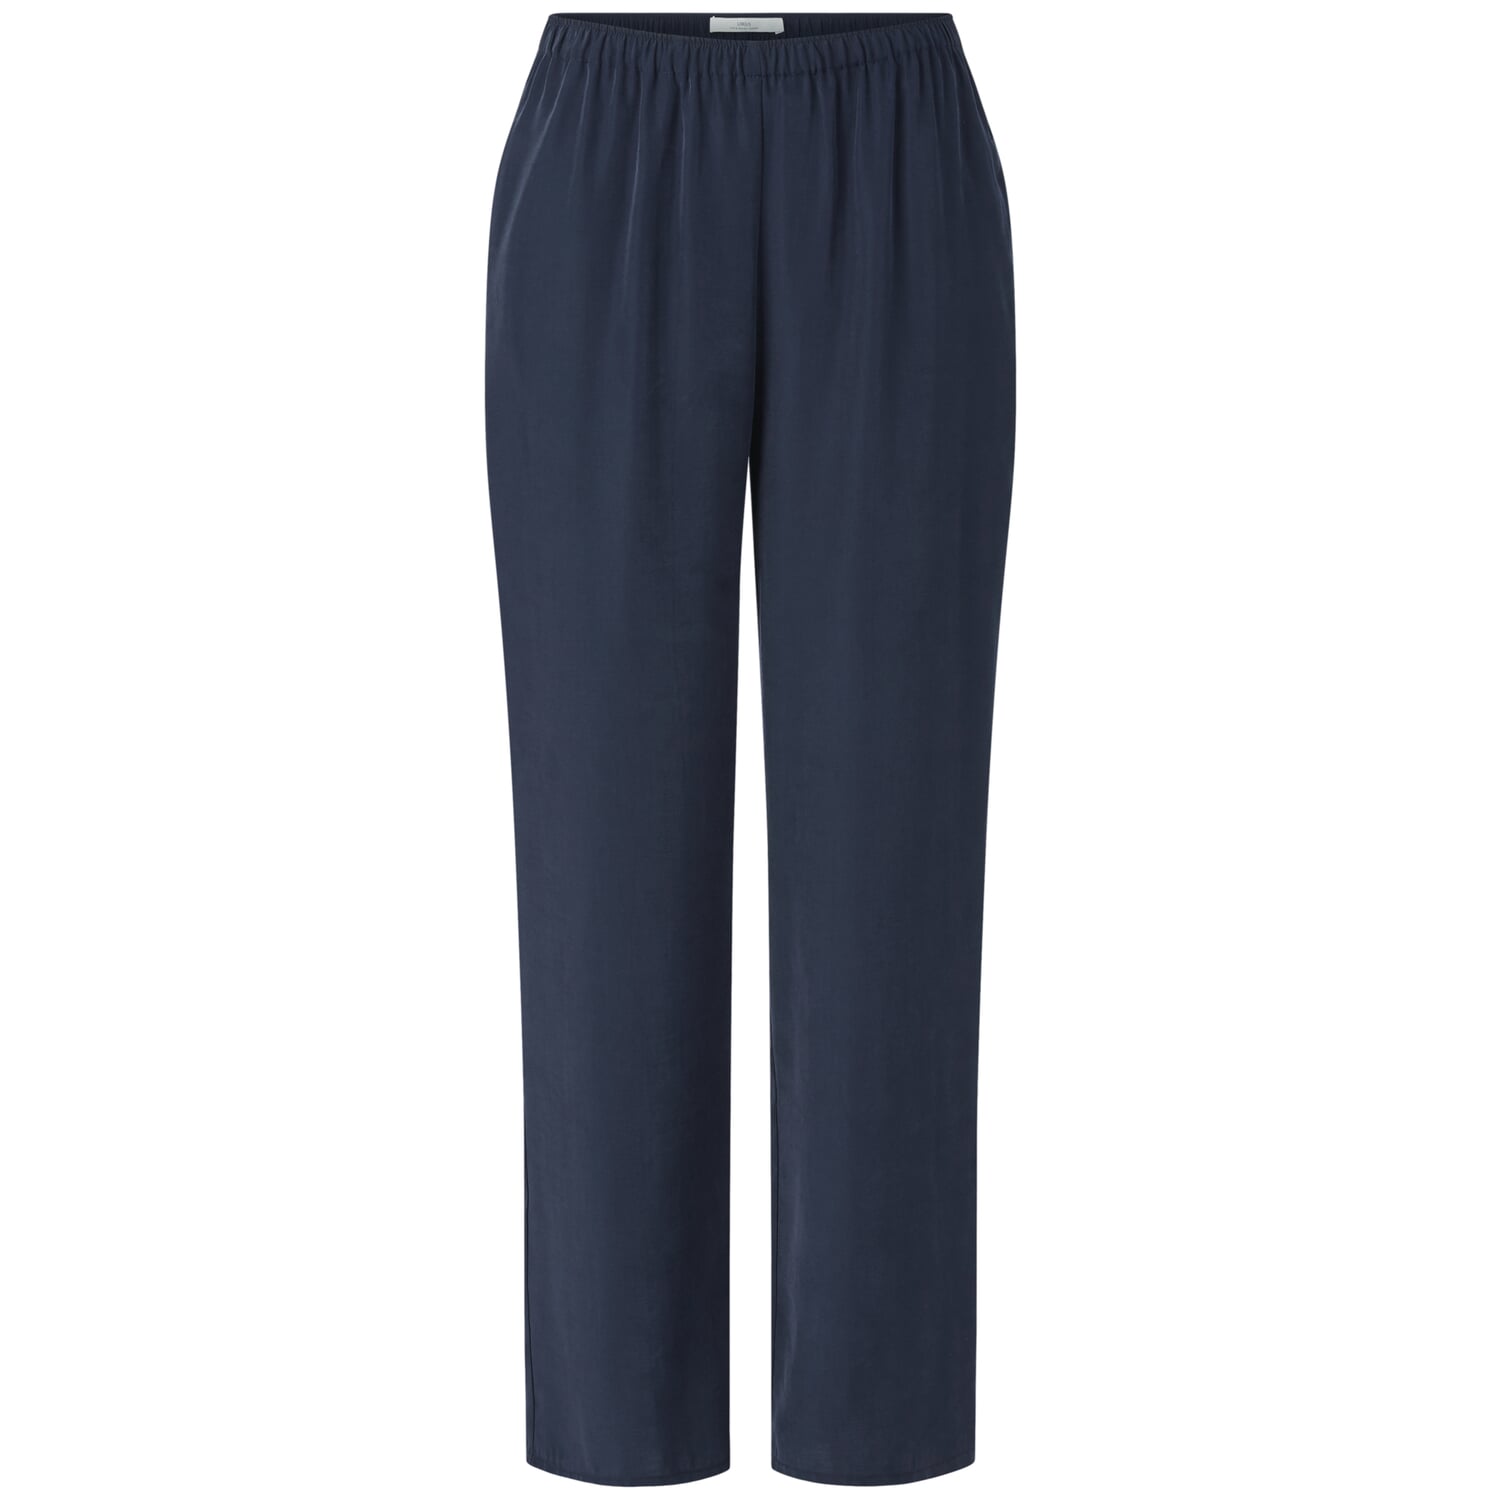 Ladies pants modal polyester, Dark blue